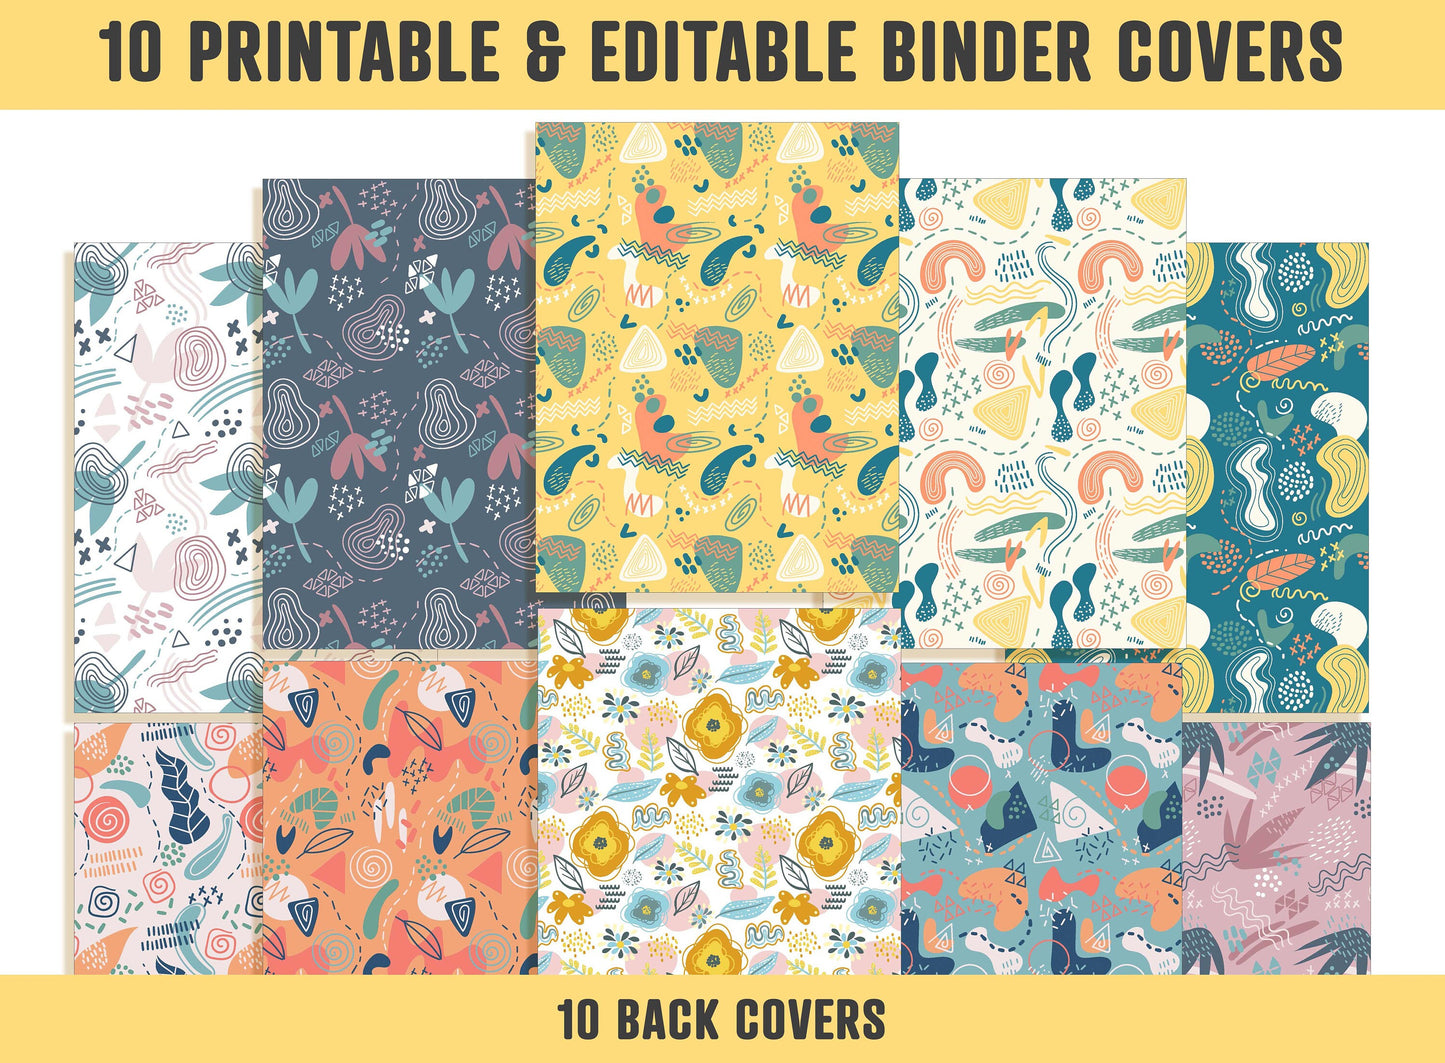 Abstract Planner Cover, 10 Printable & Editable Binder Covers+Spines, Binder Cover Inserts, Planner Cover Template, Teacher/School Binder